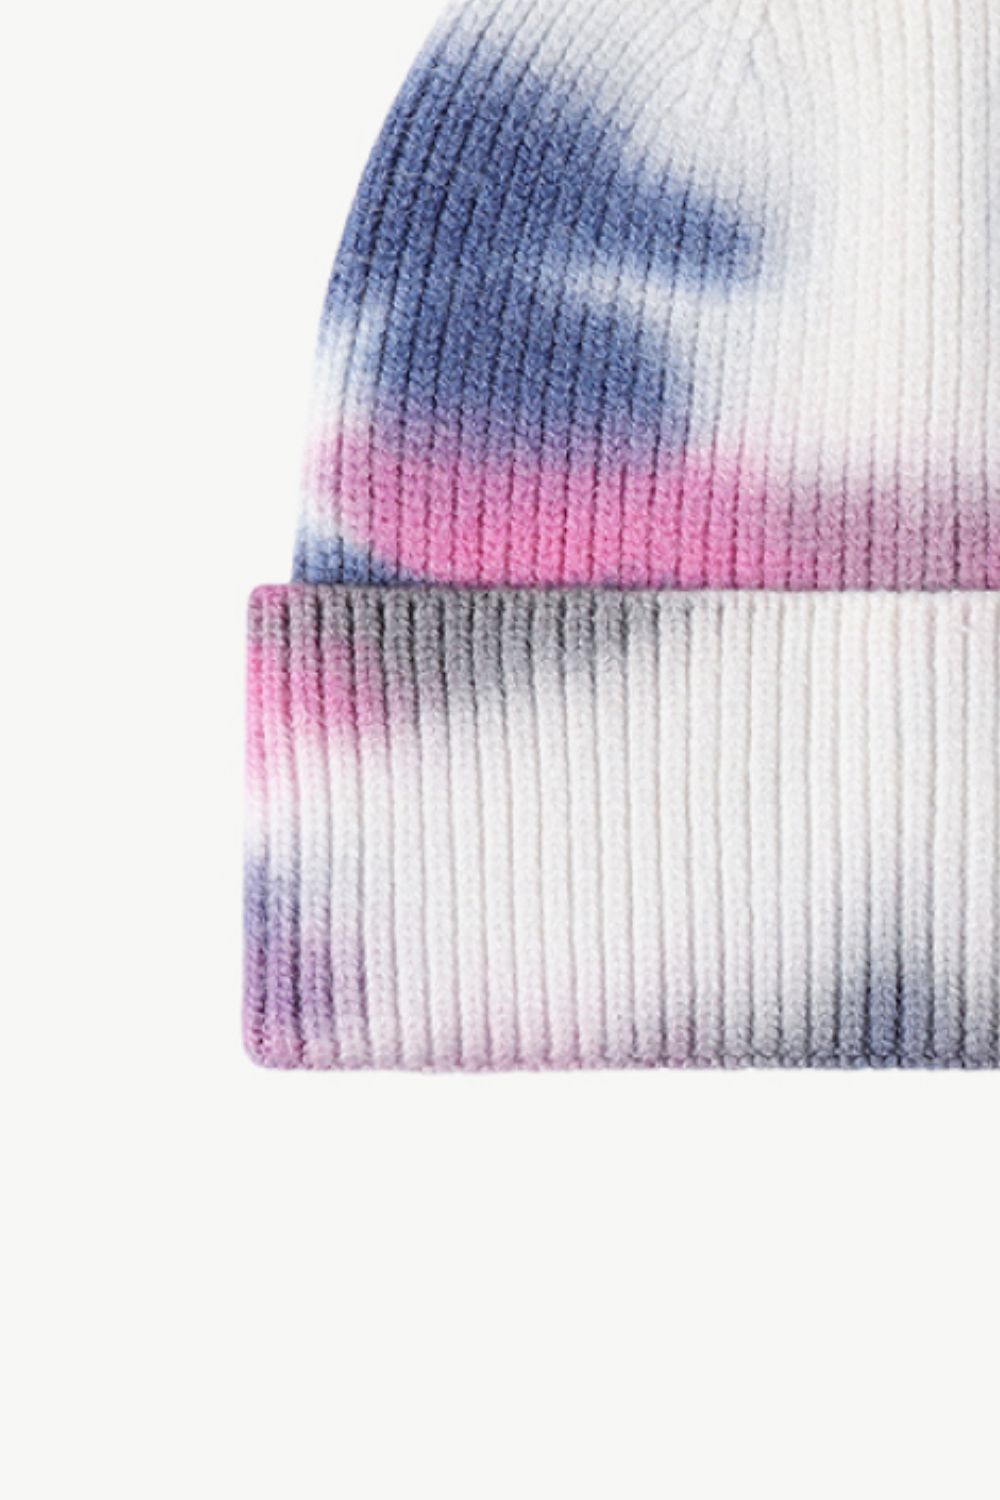 Lavender Tie-Dye Cuffed Knit Beanie Sentient Beauty Fashions *Accessories